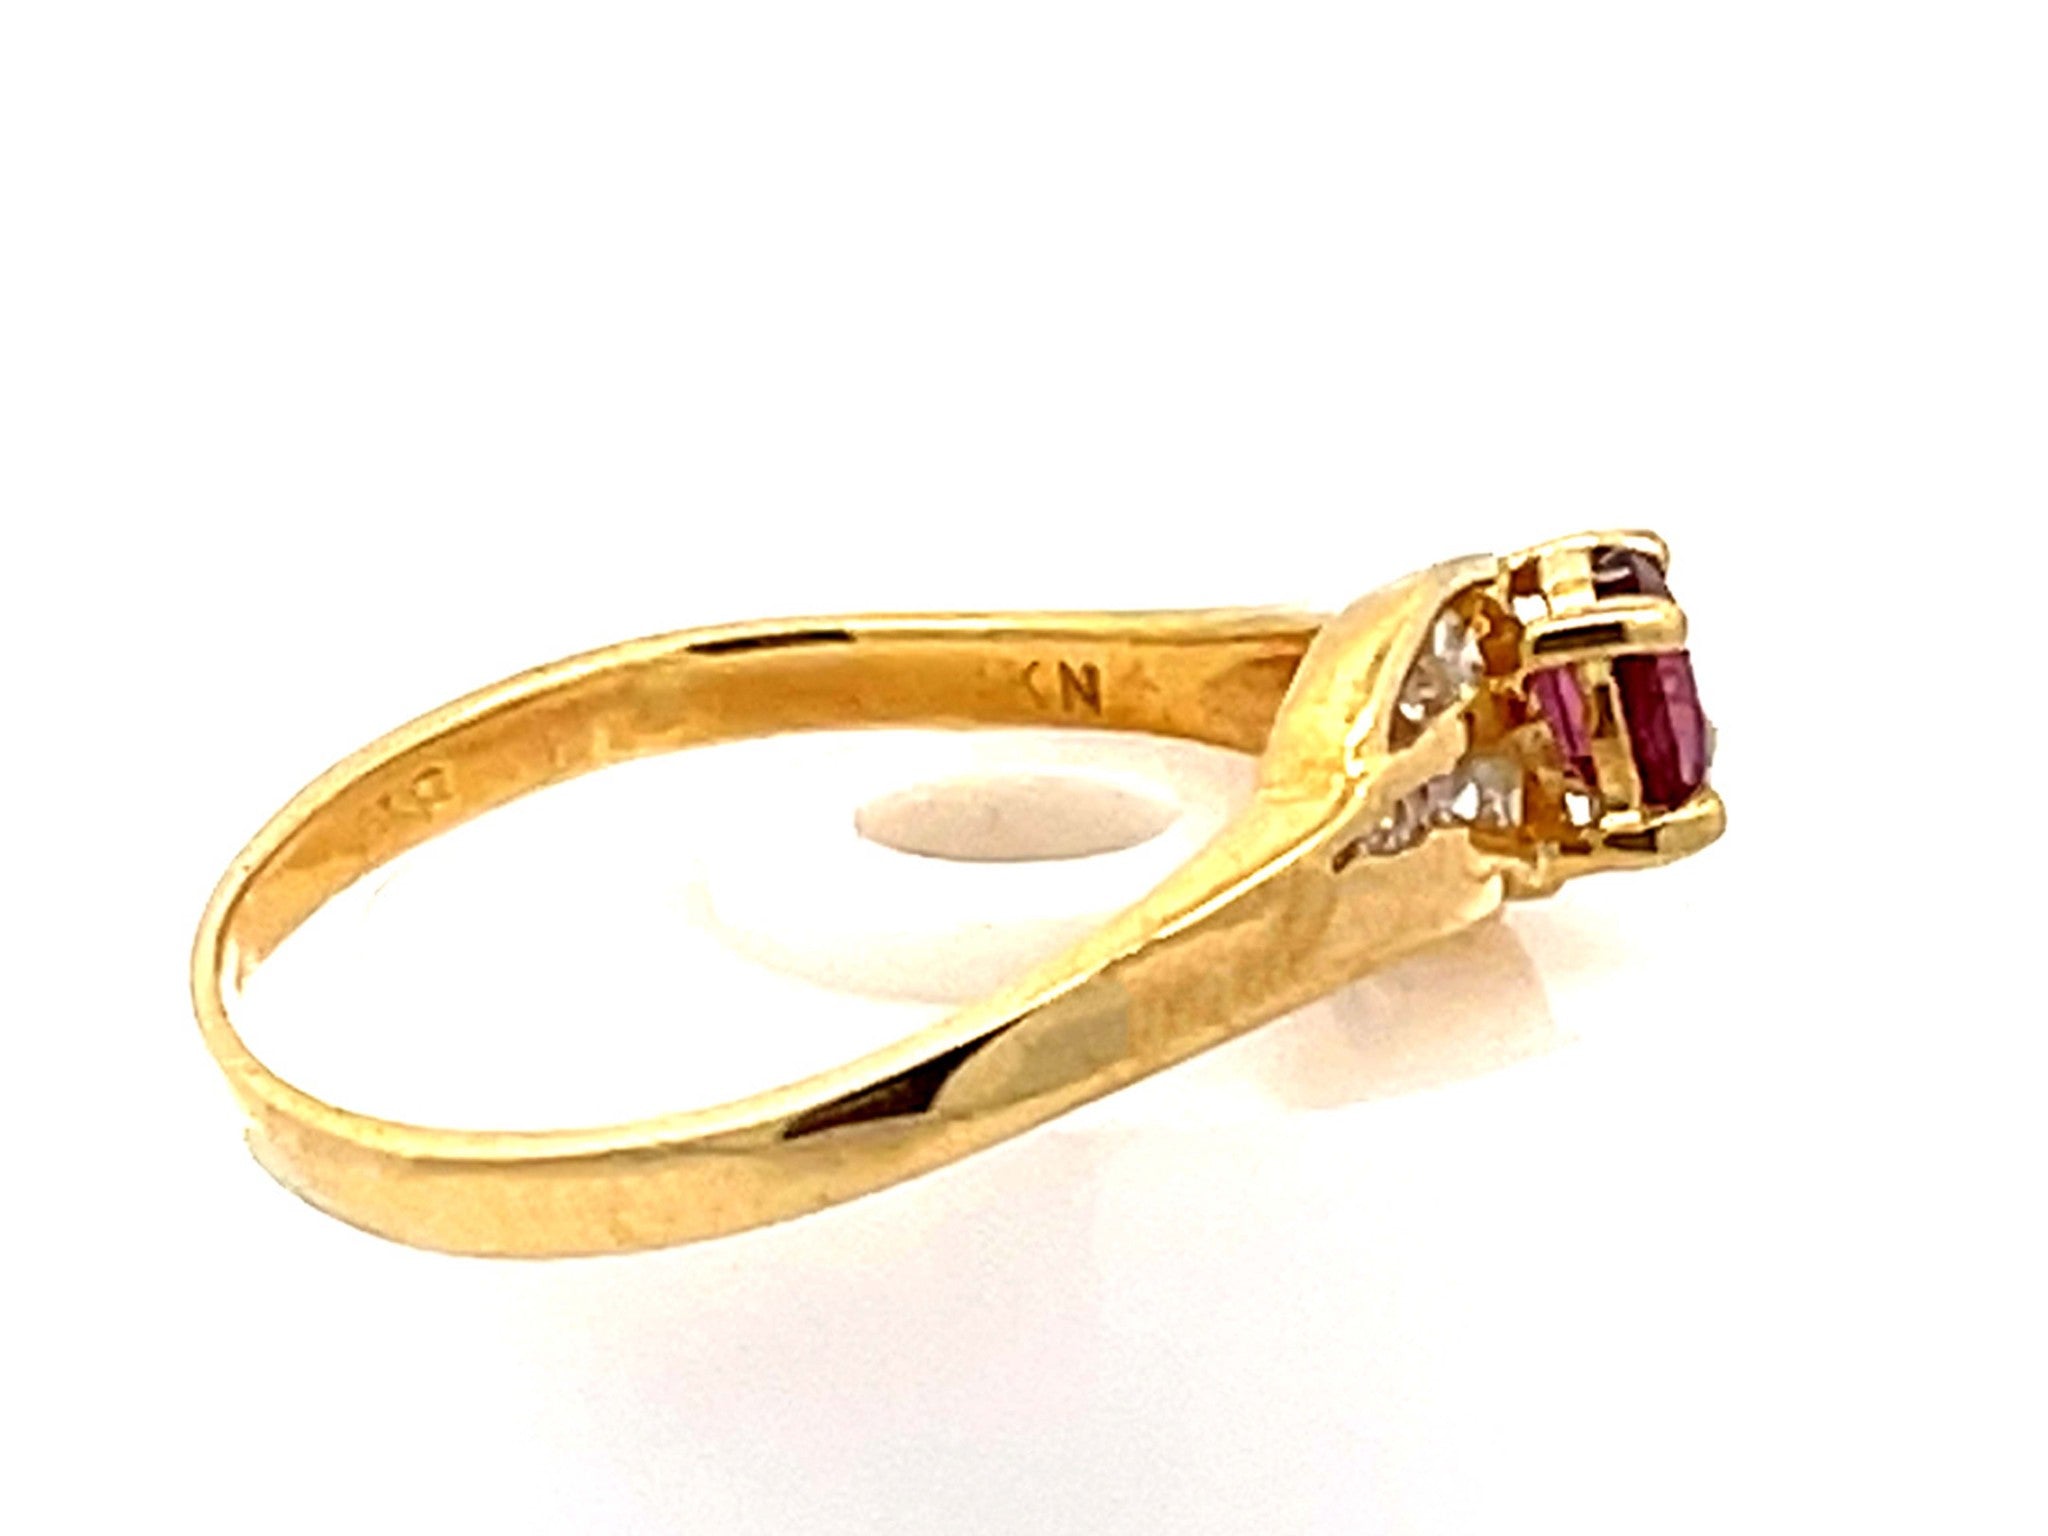 Vintage Ruby Diamond Ring in 14k Gold